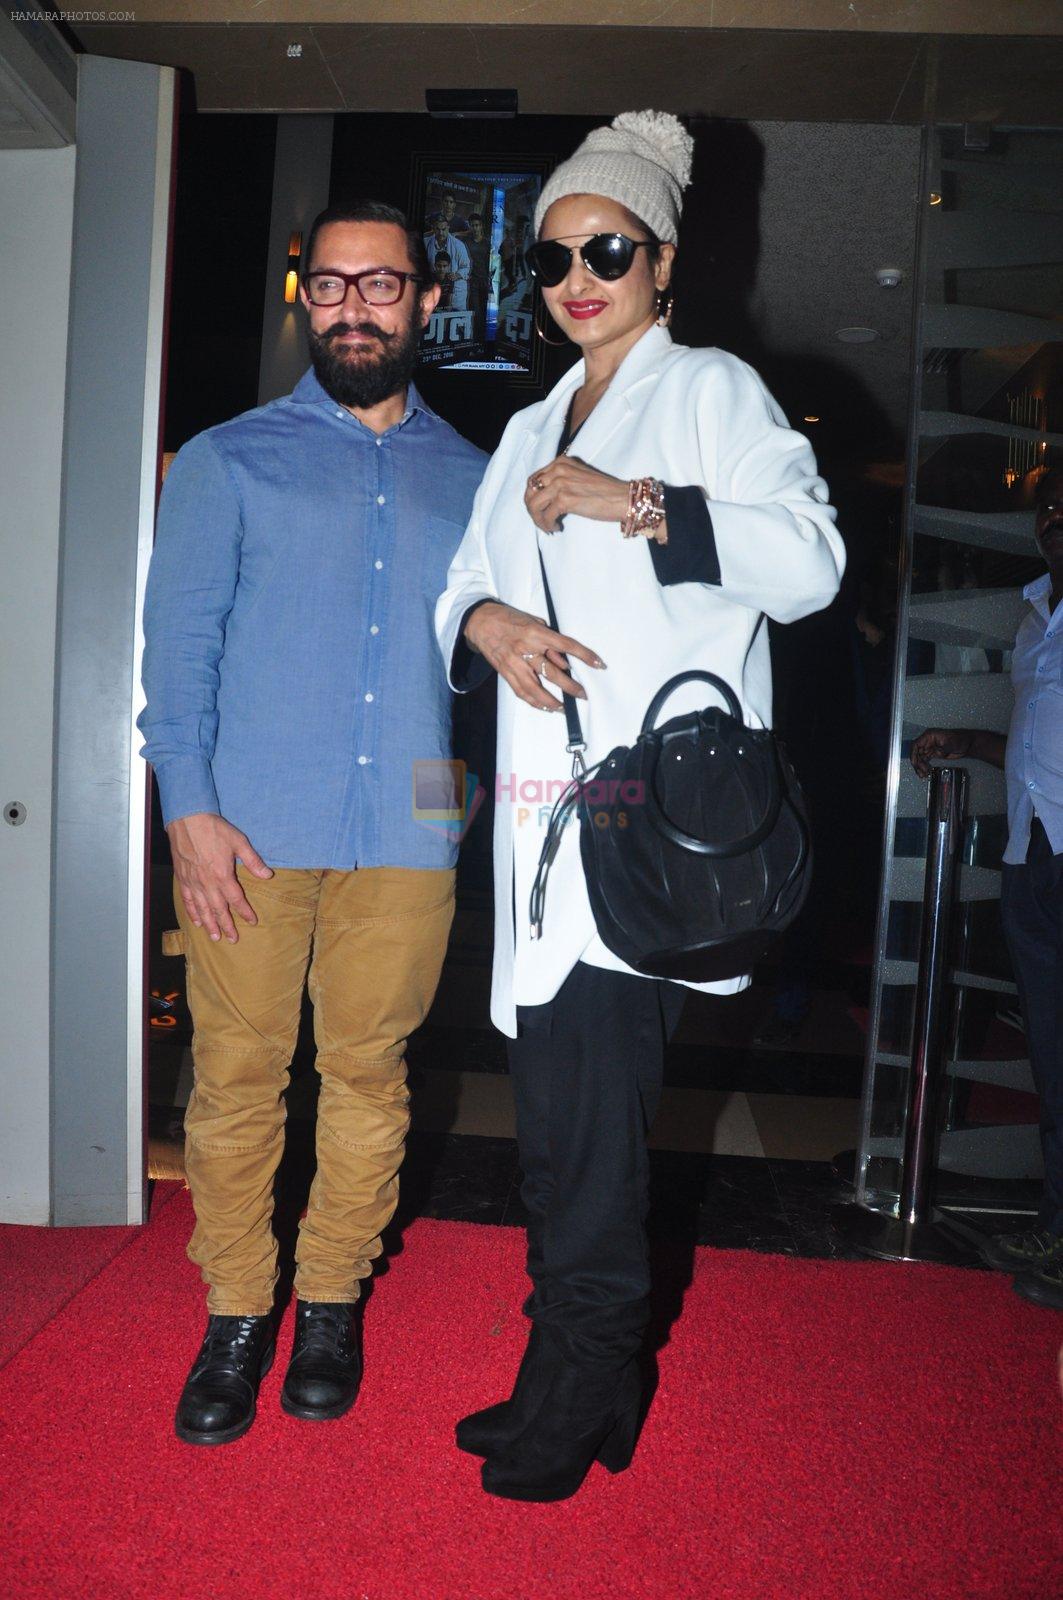 Aamir Khan, Rekha at Dangal premiere on 22nd Dec 2016